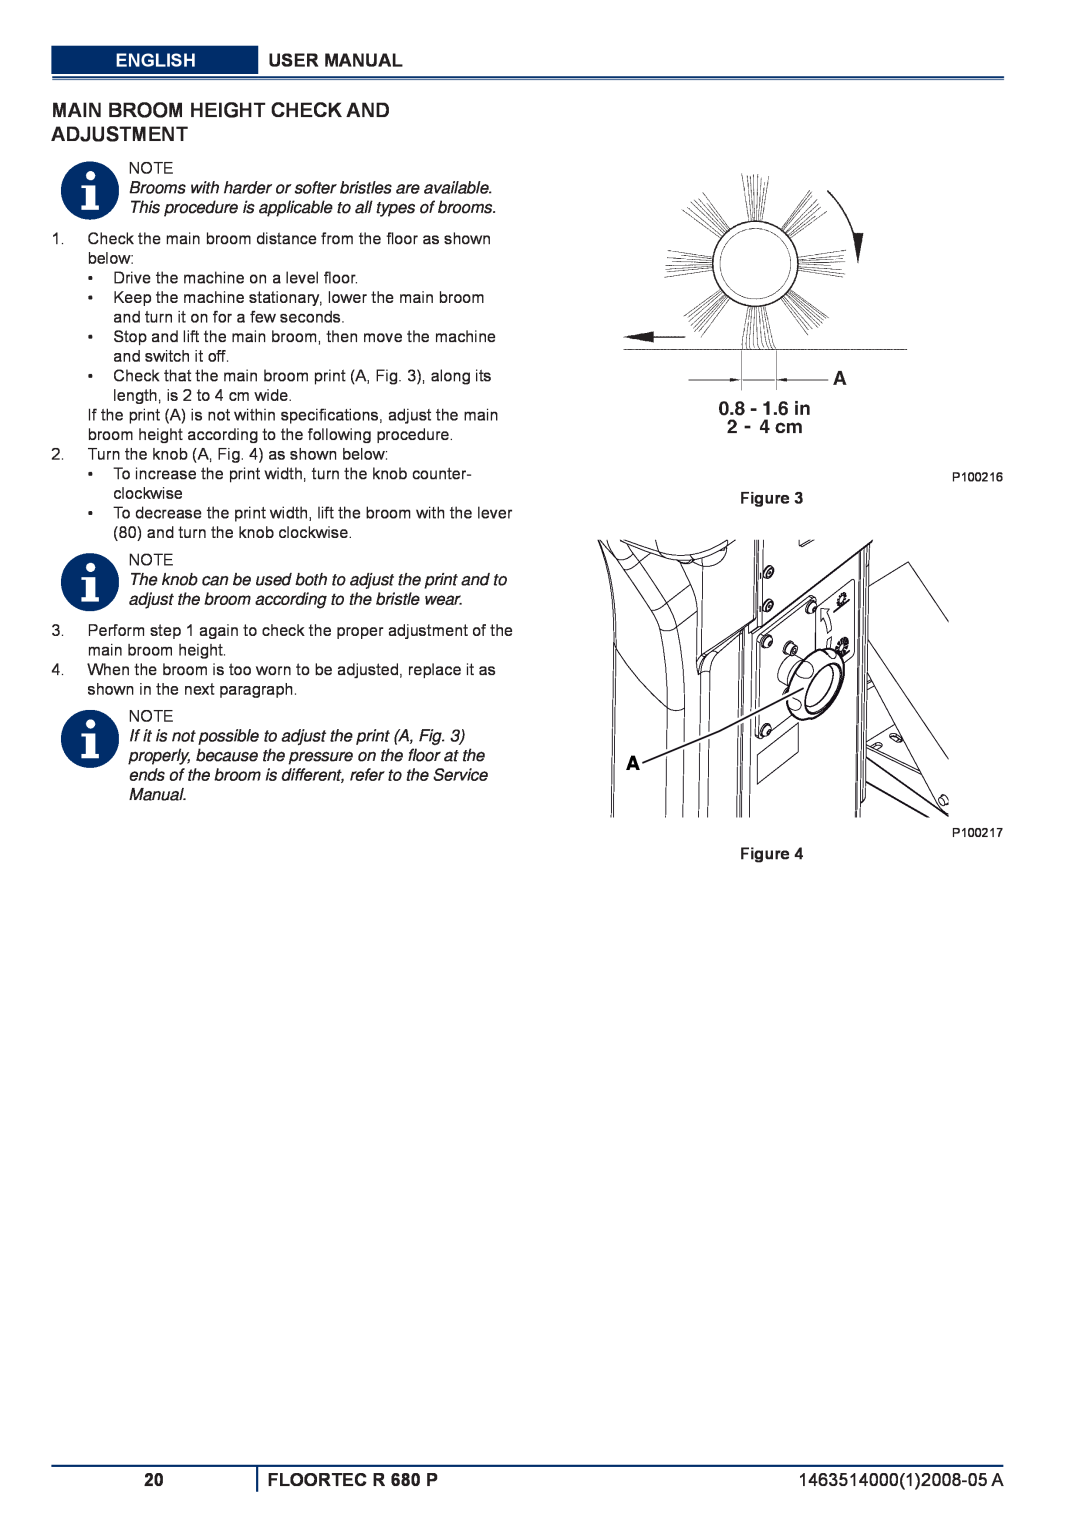 Nilfisk-ALTO manuel dutilisation Main Broom Height Check And Adjustment, English, User Manual, FLOORTEC R 680 P, Figure 